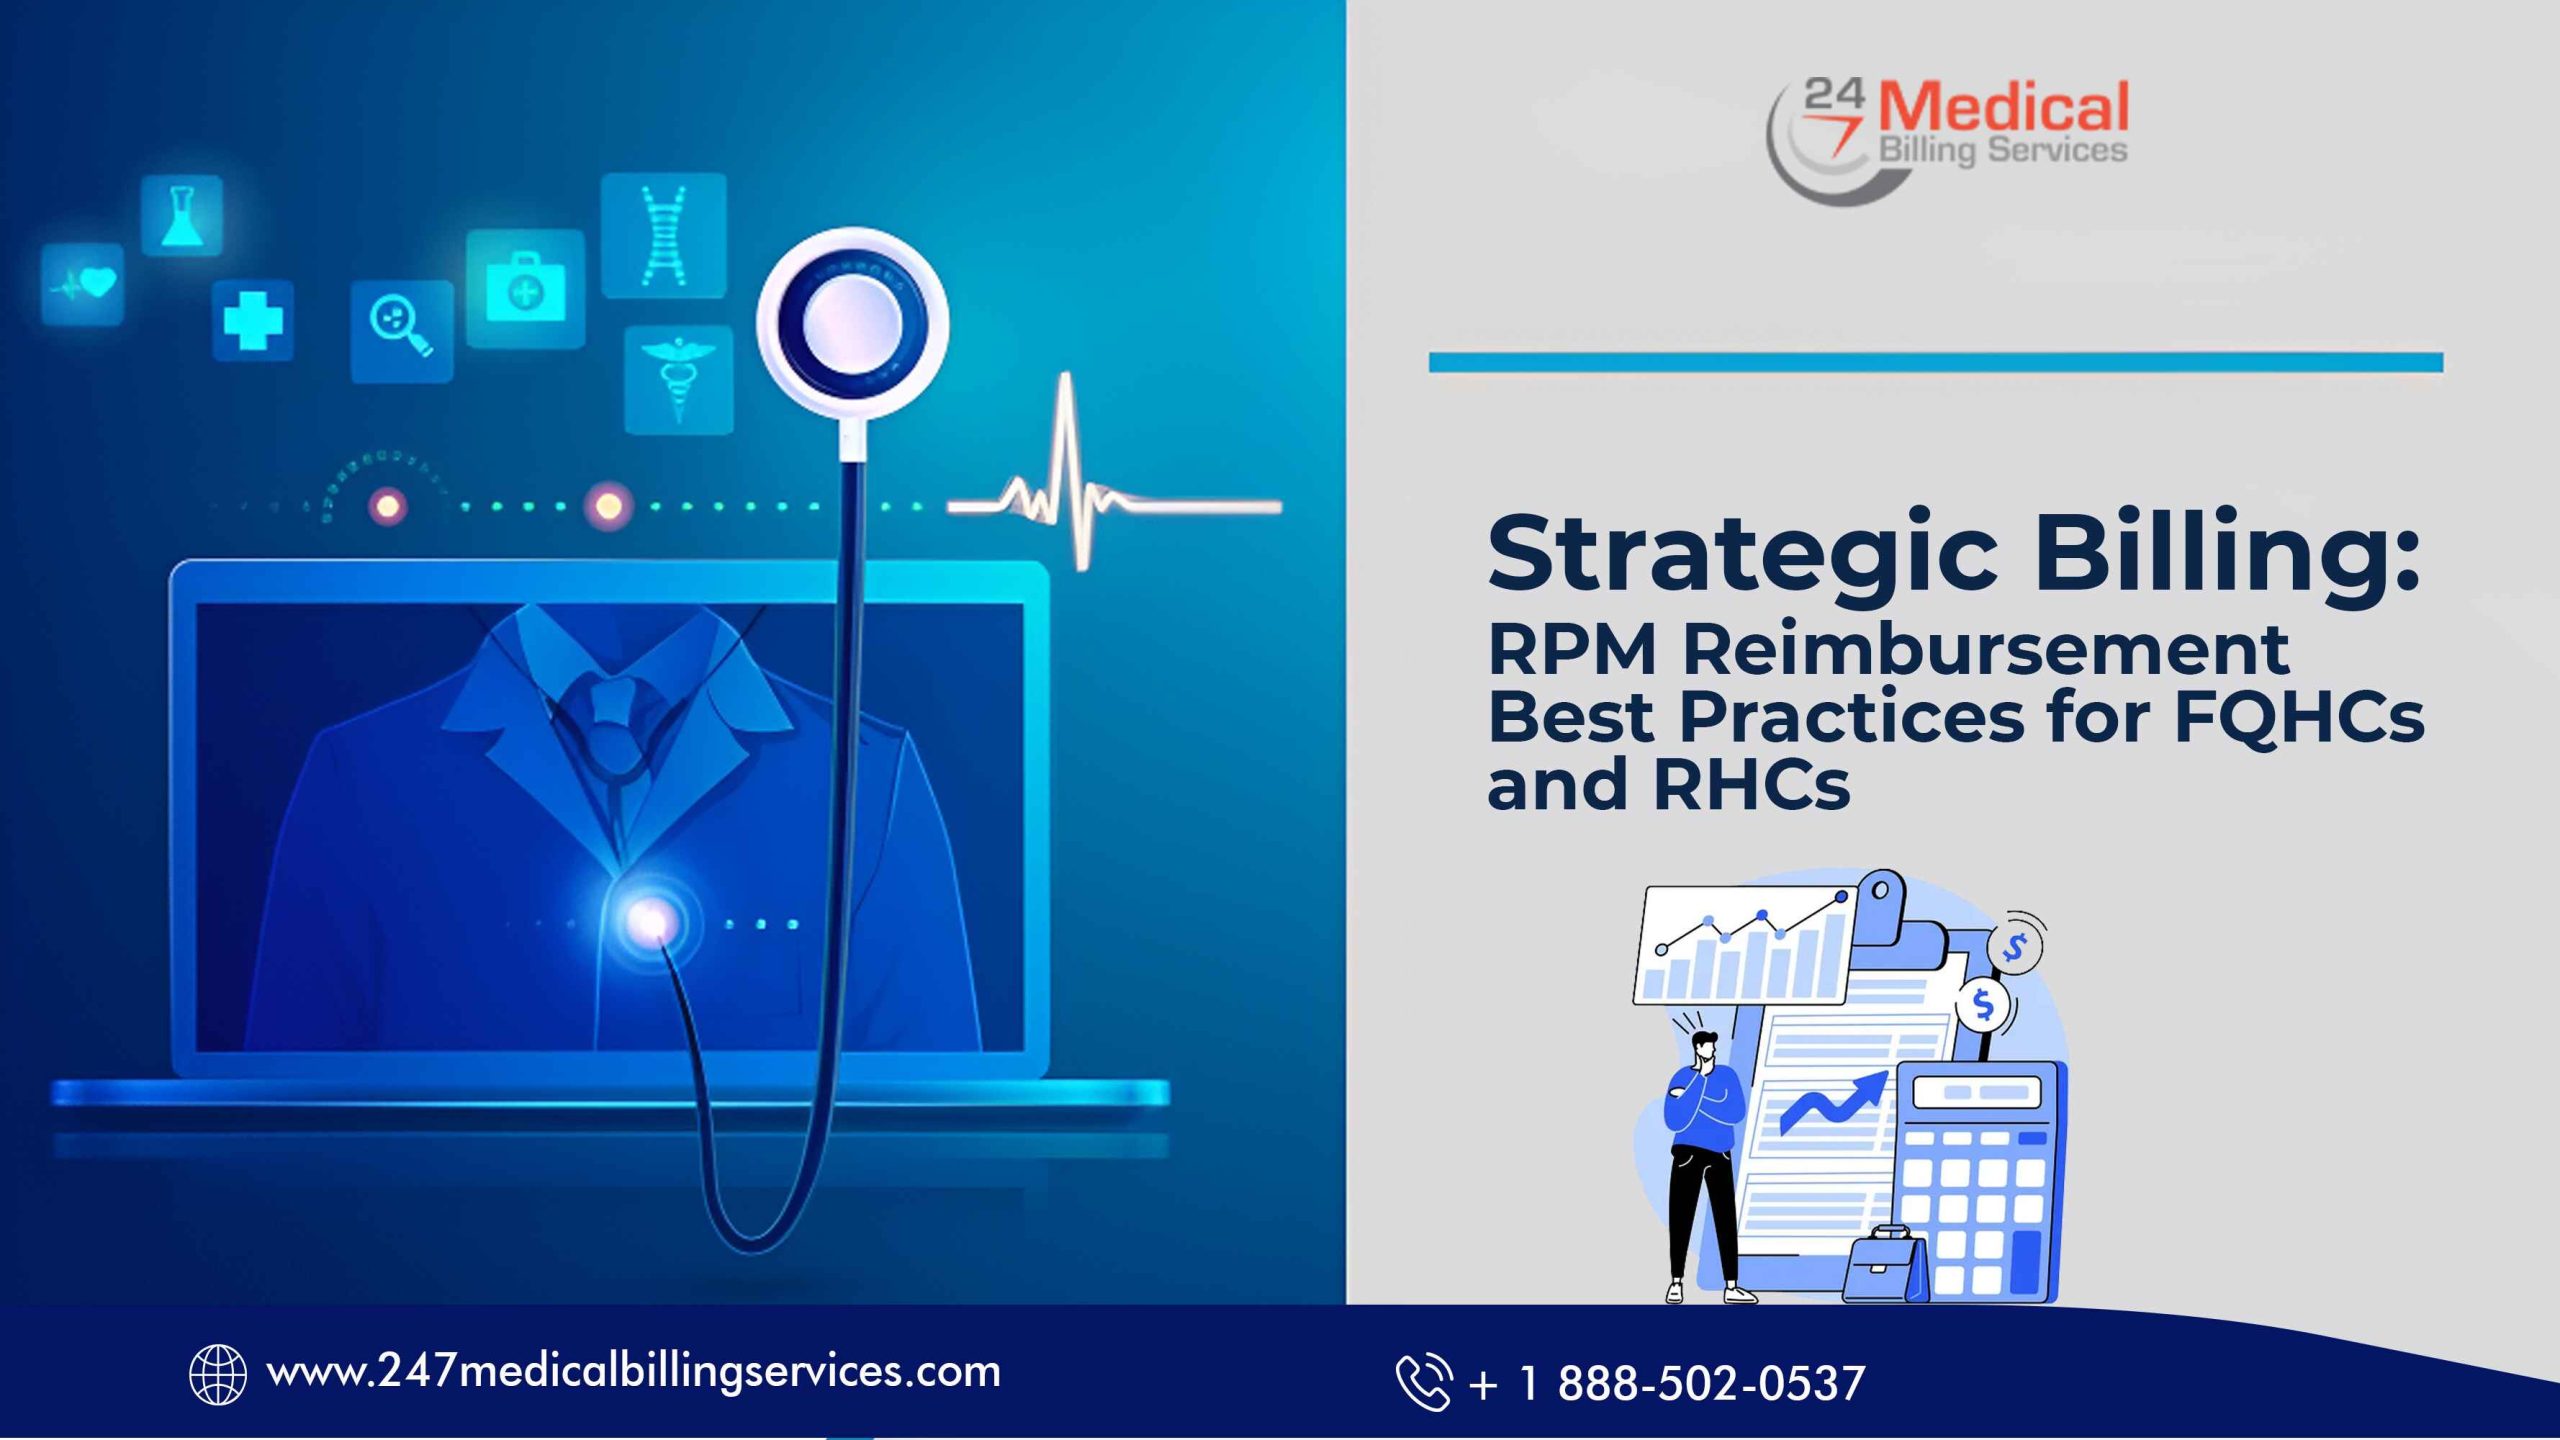  Strategic Billing: RPM Reimbursement Best Practices for FQHCs and RHCs